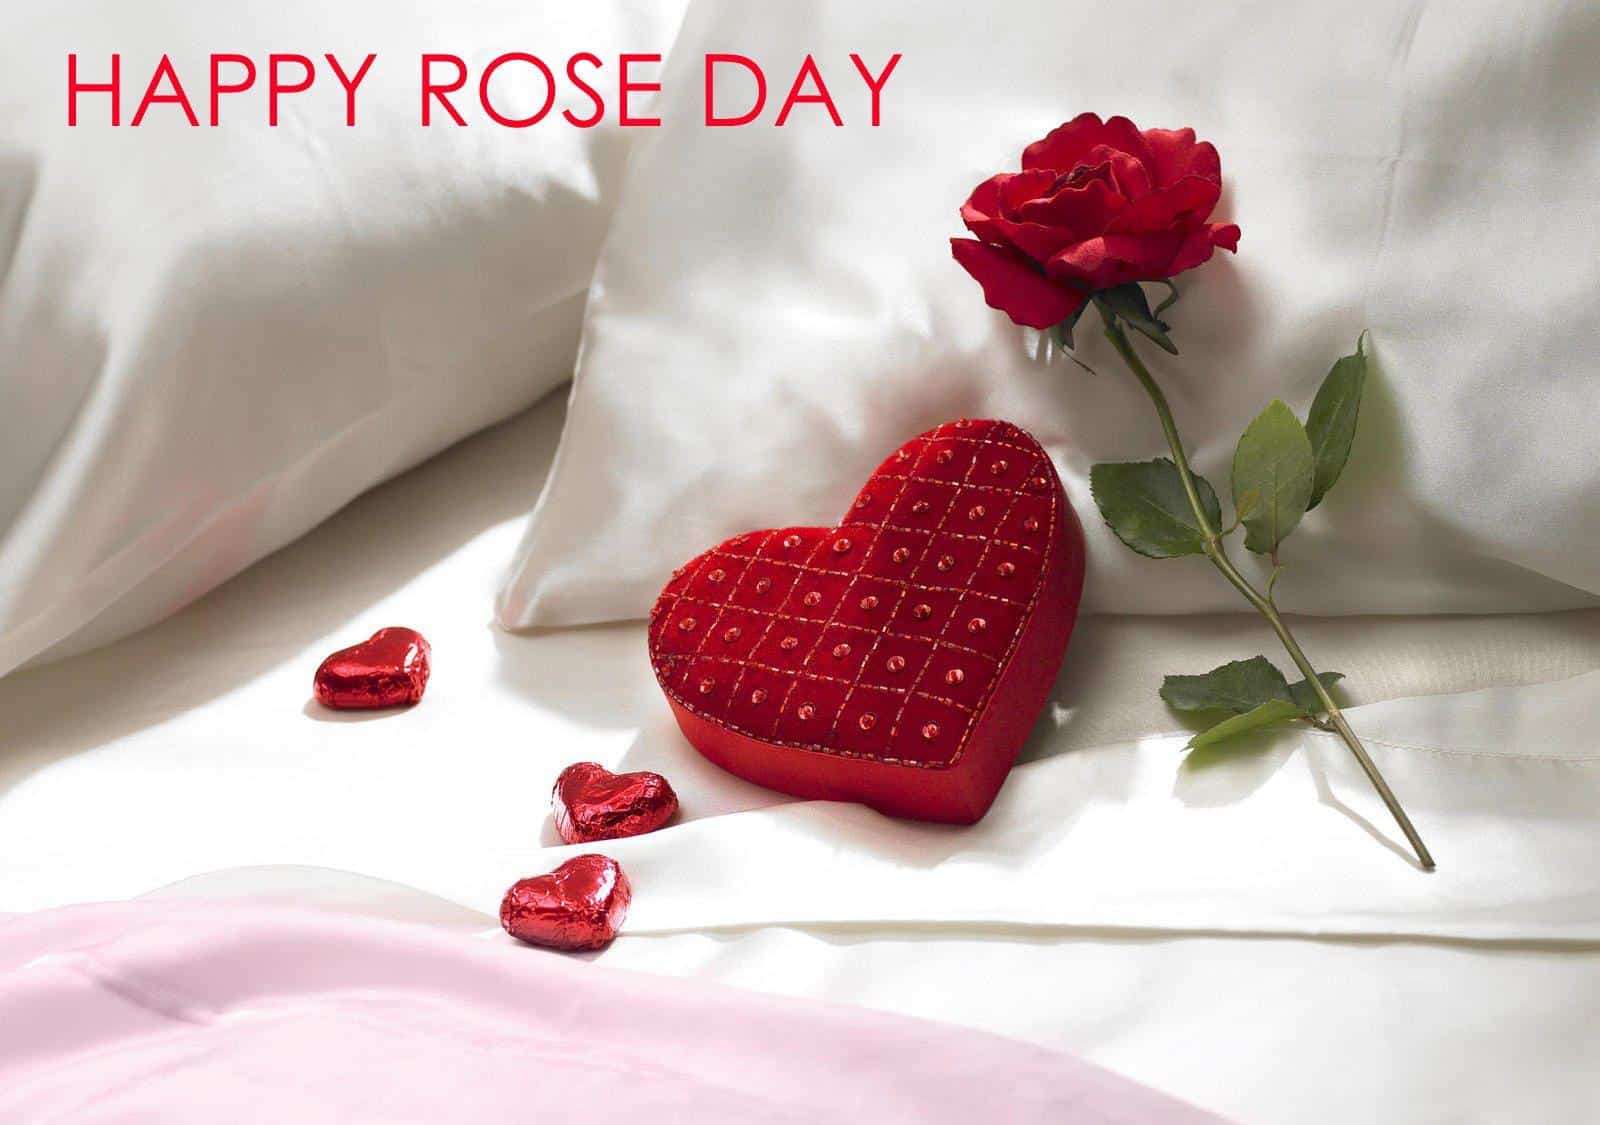 Rose Day Images for Husband